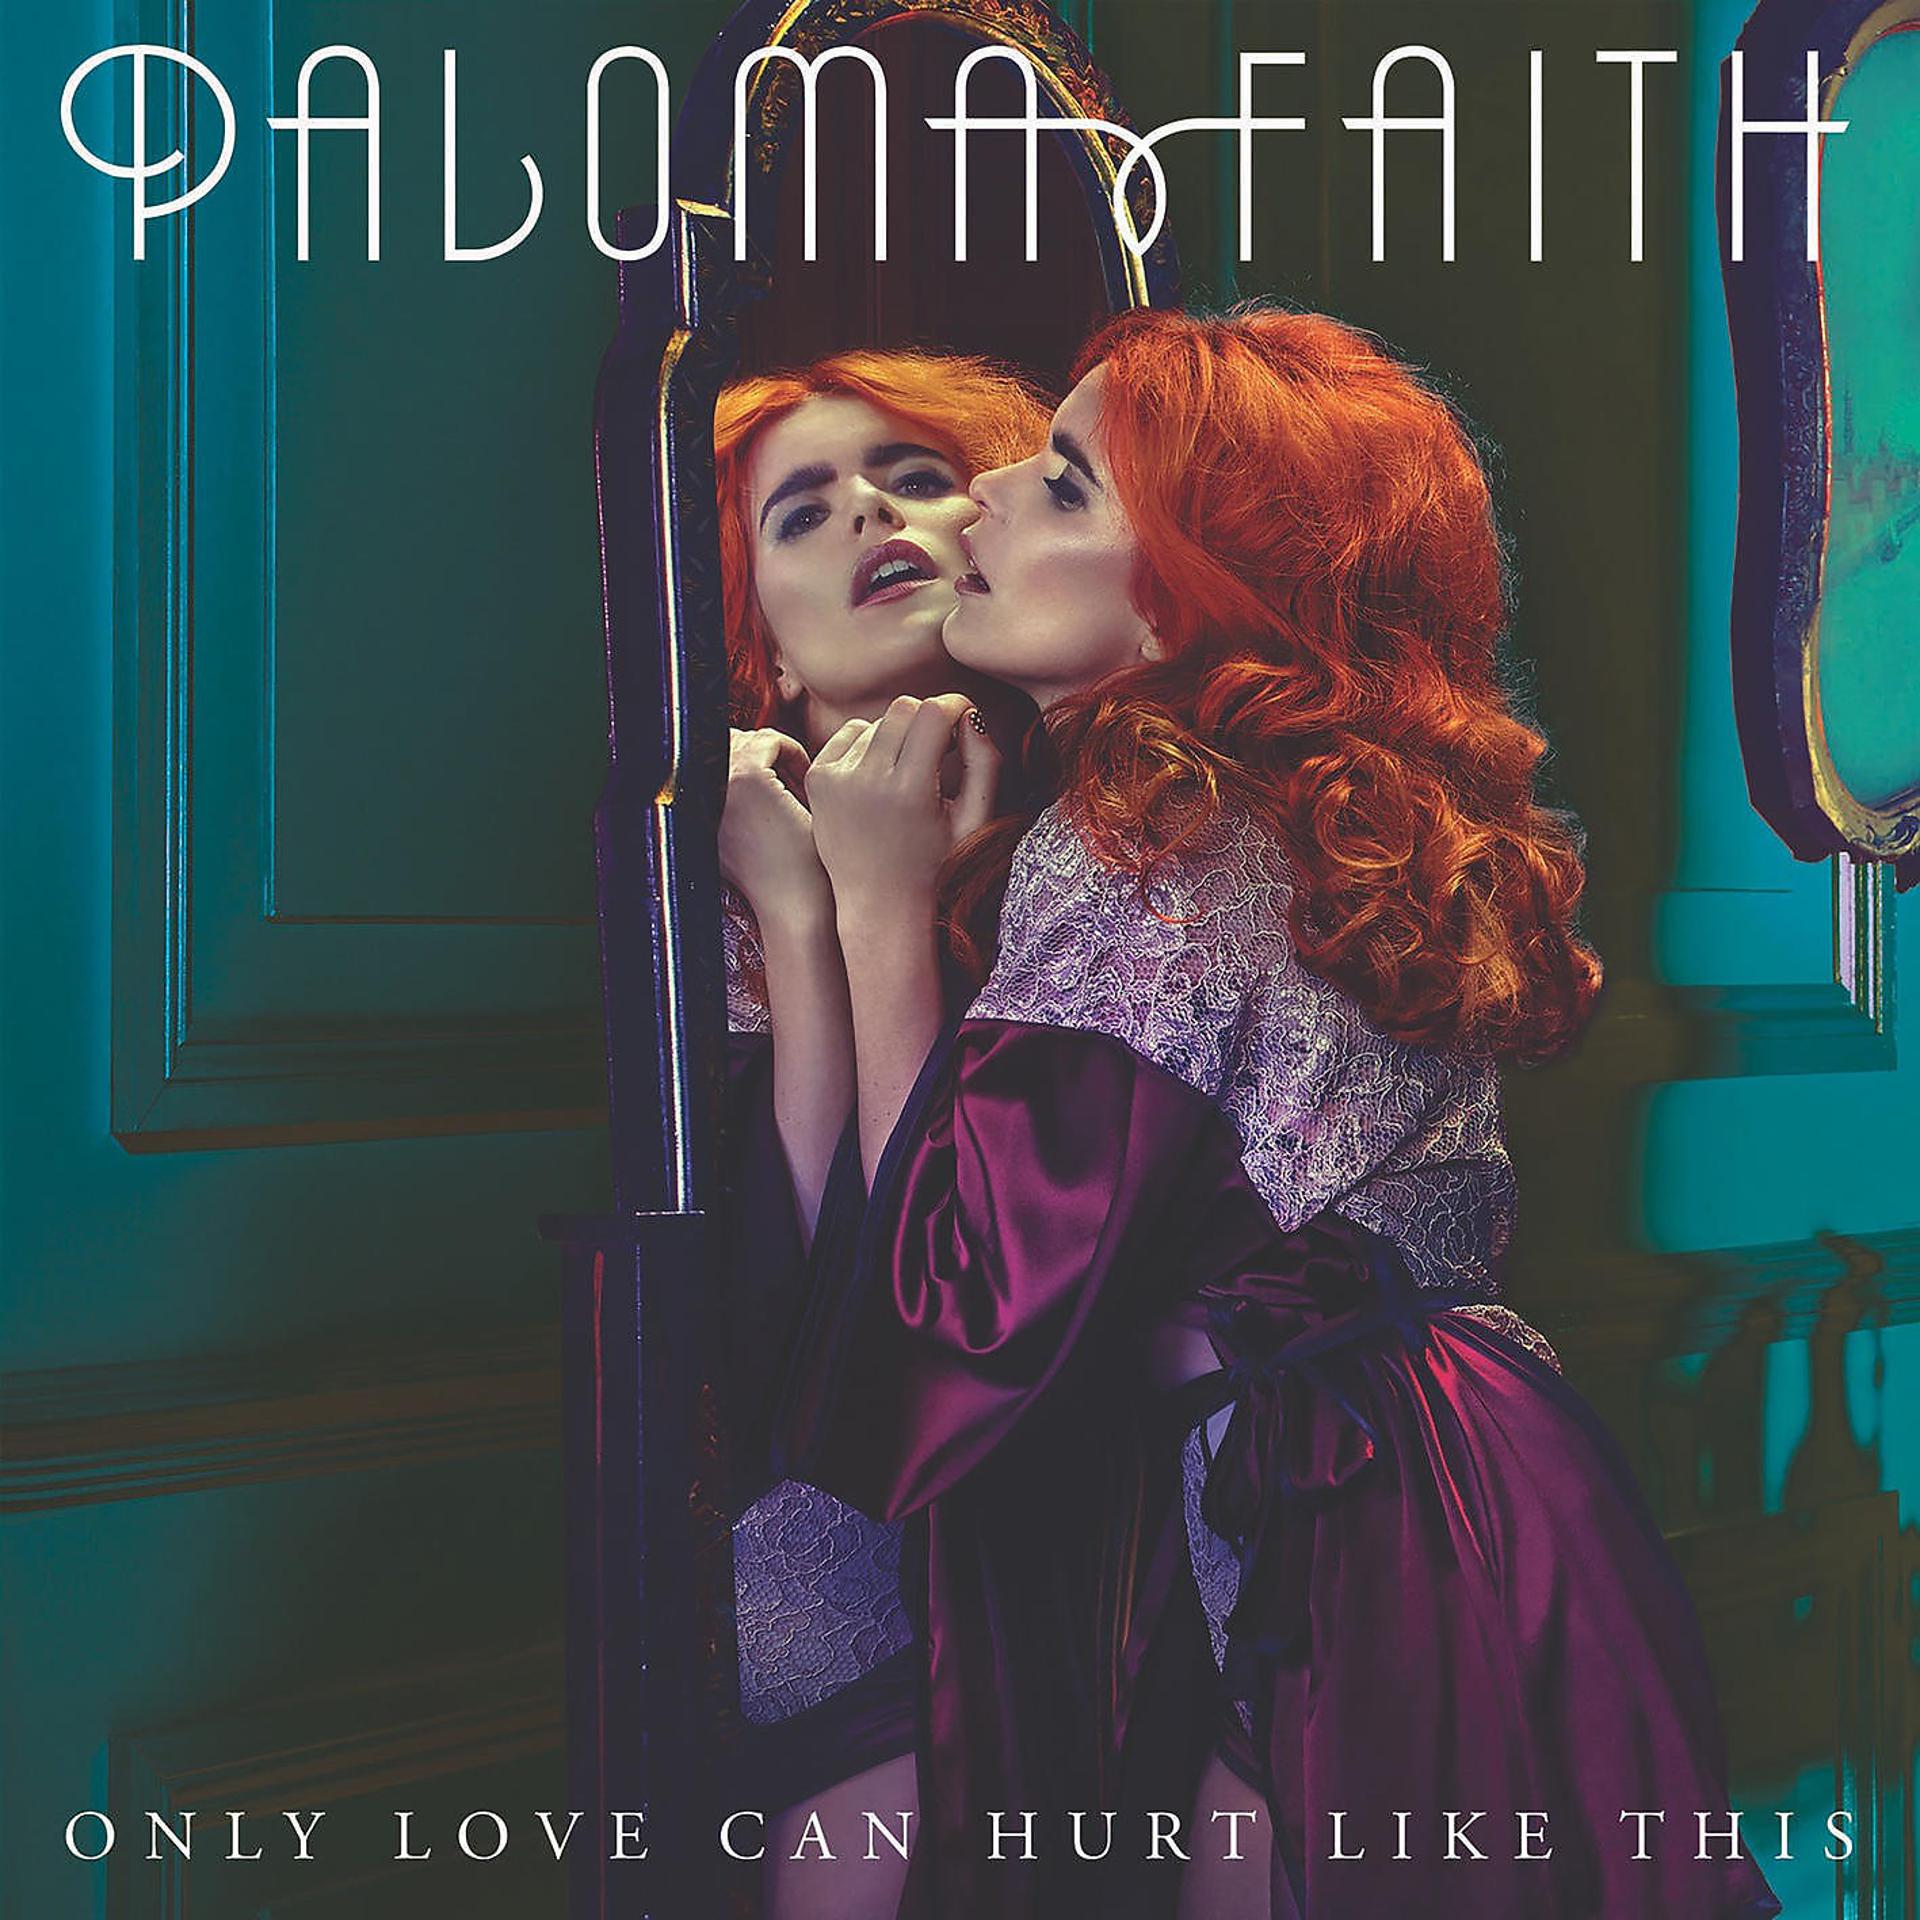 Онли лов. Only Love can hurt like this Палома Фейт. Only Love can hurt like this от Paloma Faith. Paloma Faith only.